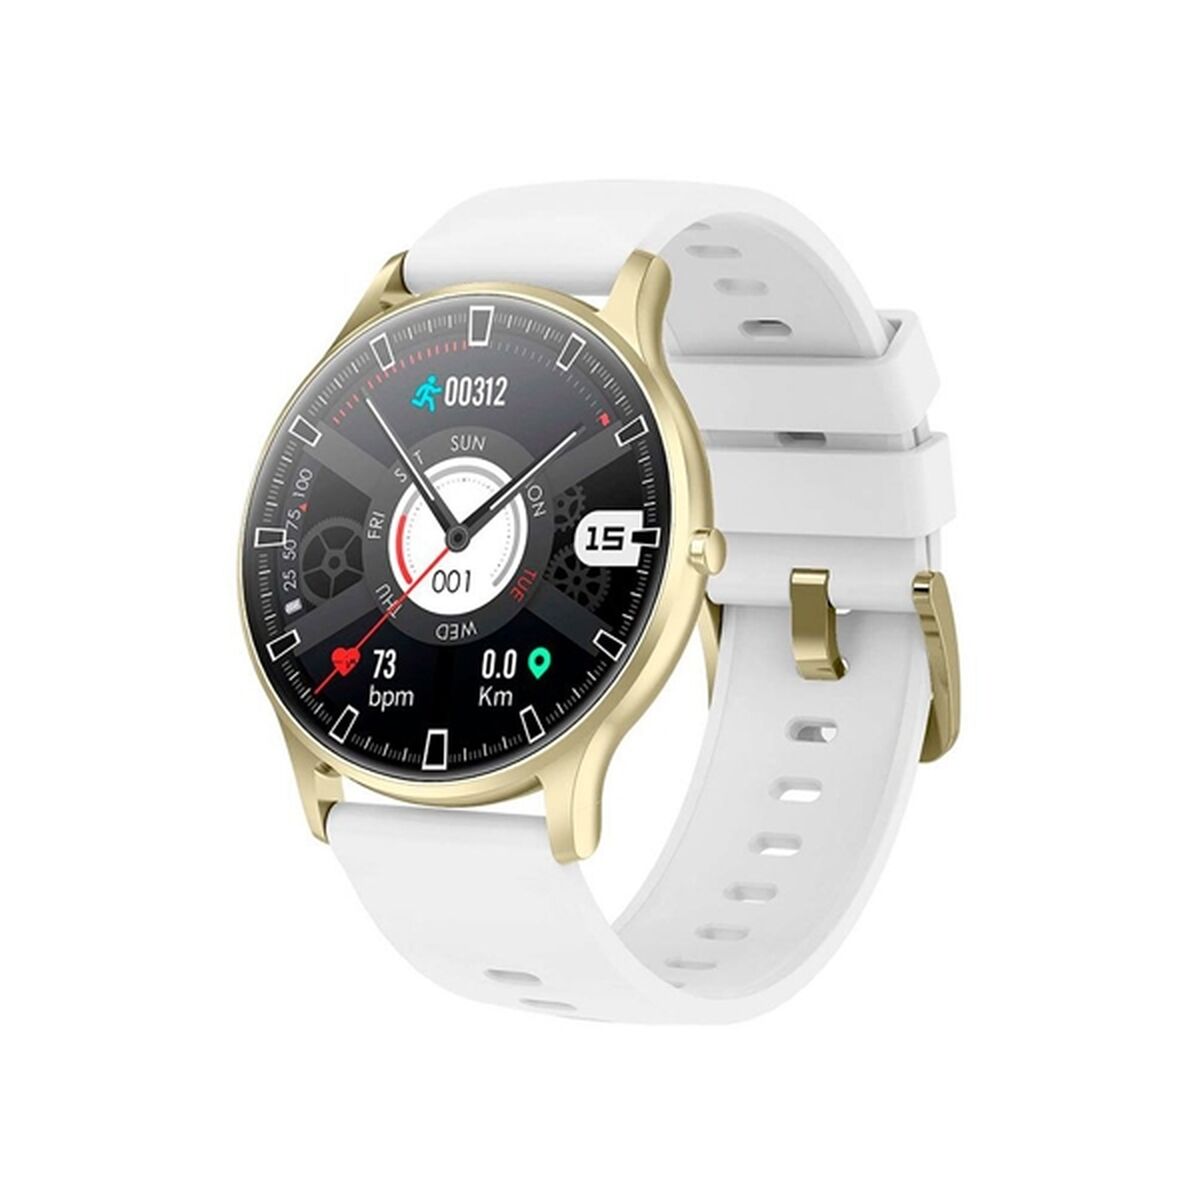 Kaufe Smartwatch Radiant RAS21004 bei AWK Flagship um € 103.00